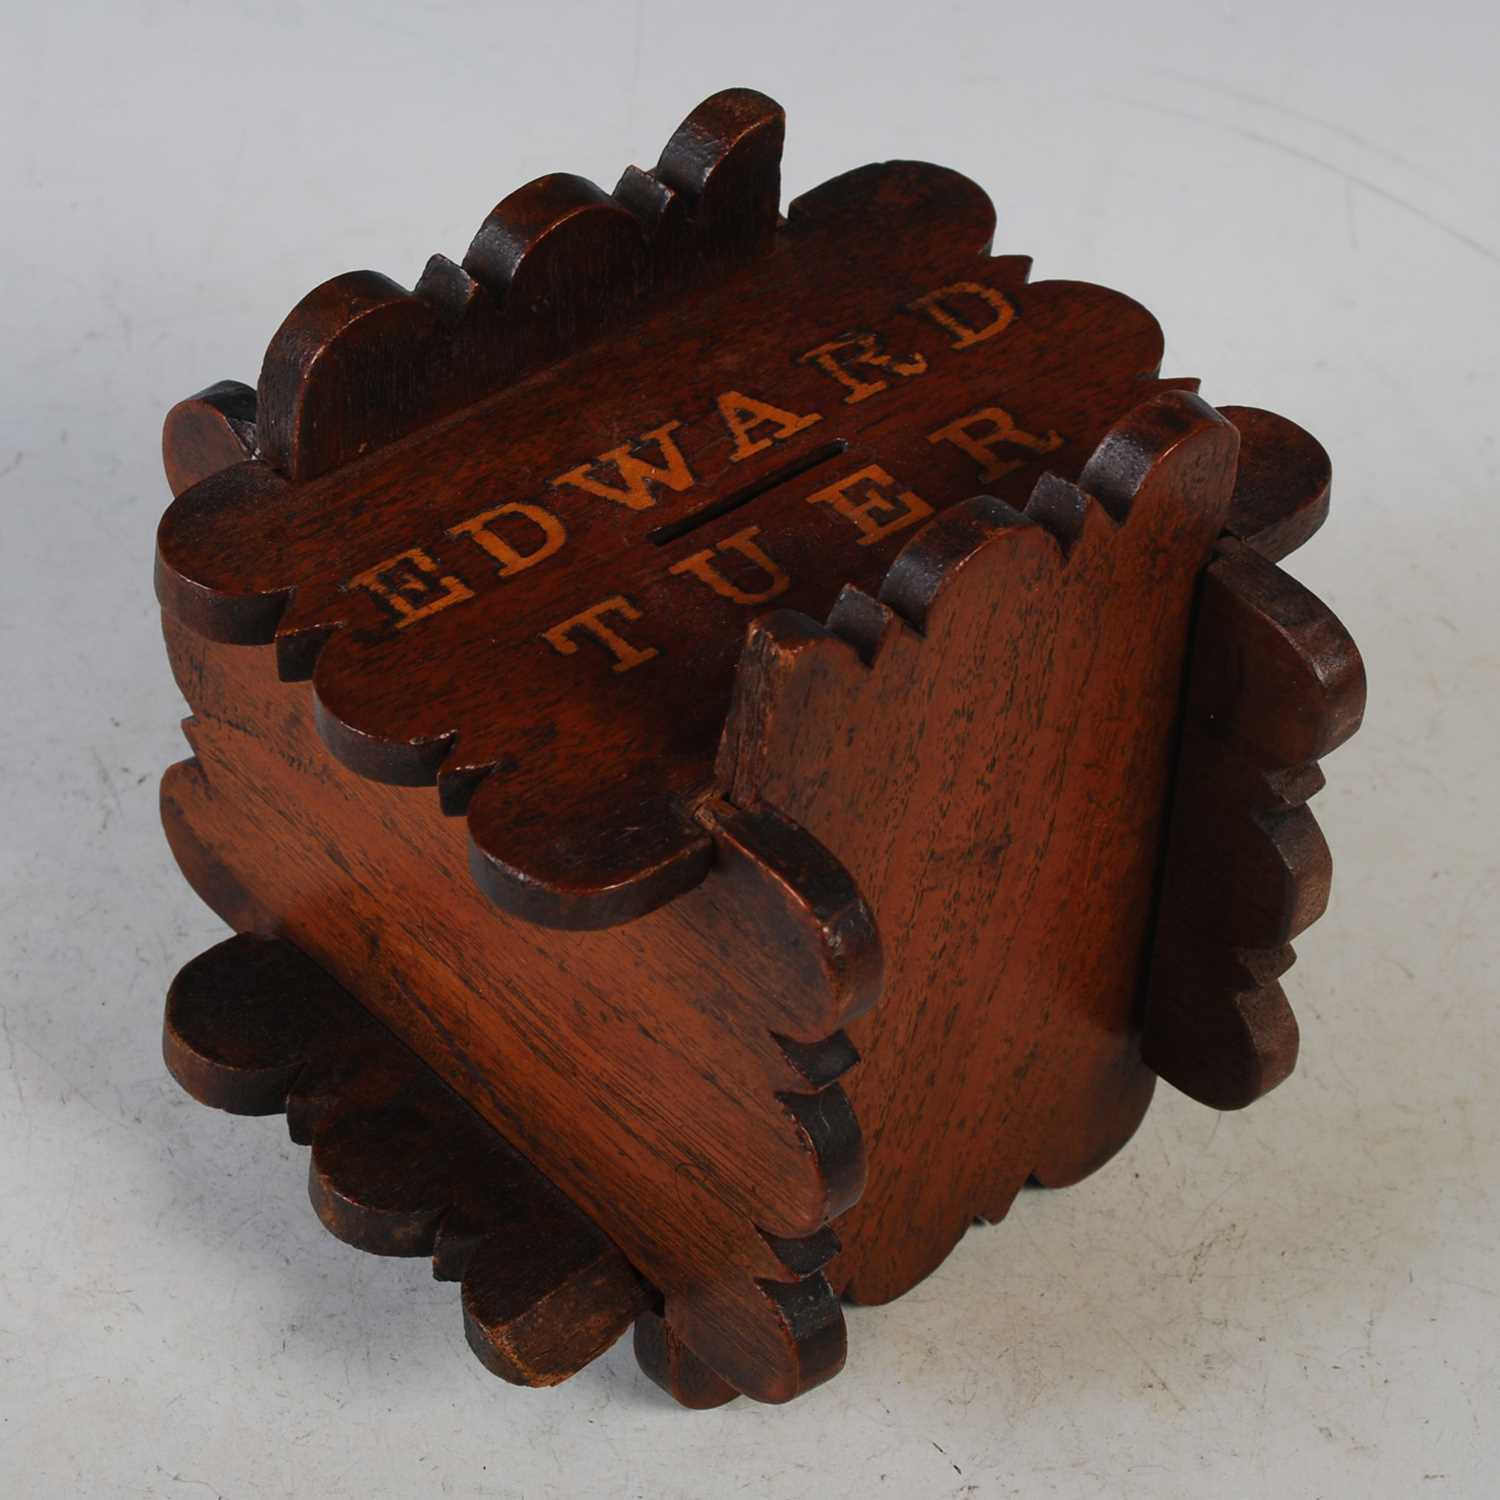 A mahogany puzzle money bank inscribed ‘Edward Tuer’, 14cm high x 14cm wide.